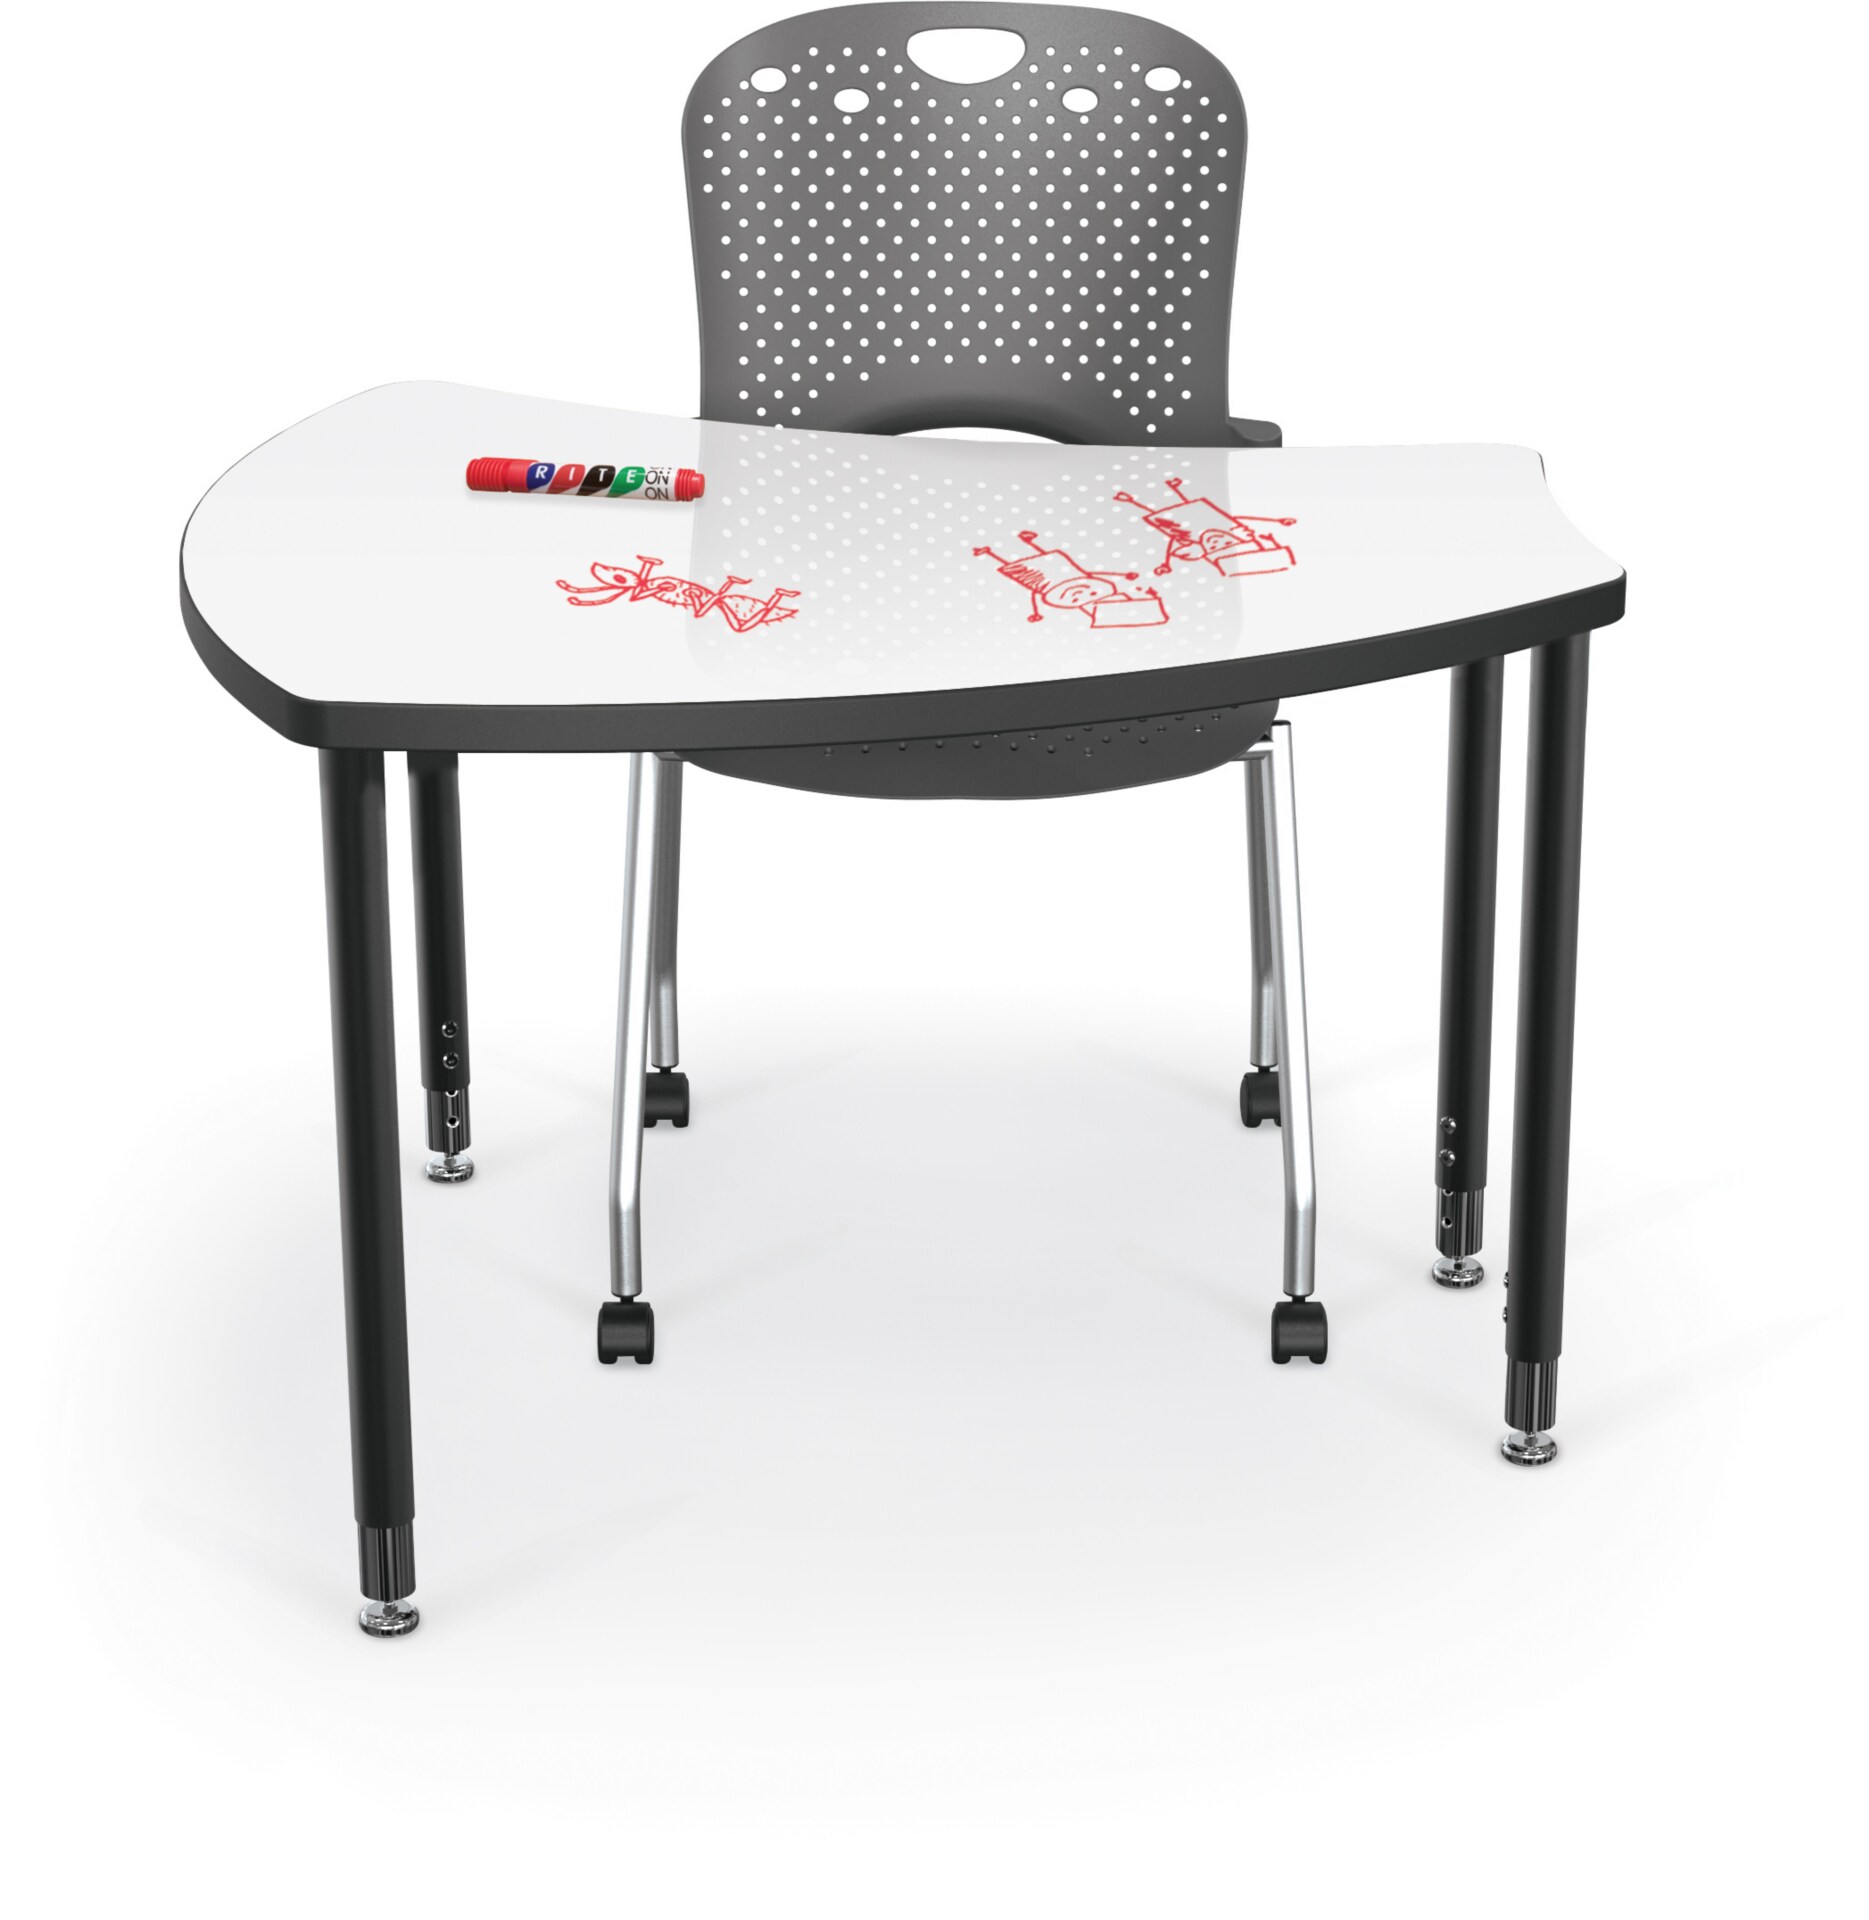 Balt Large Shape Desk with Whiteboard Top